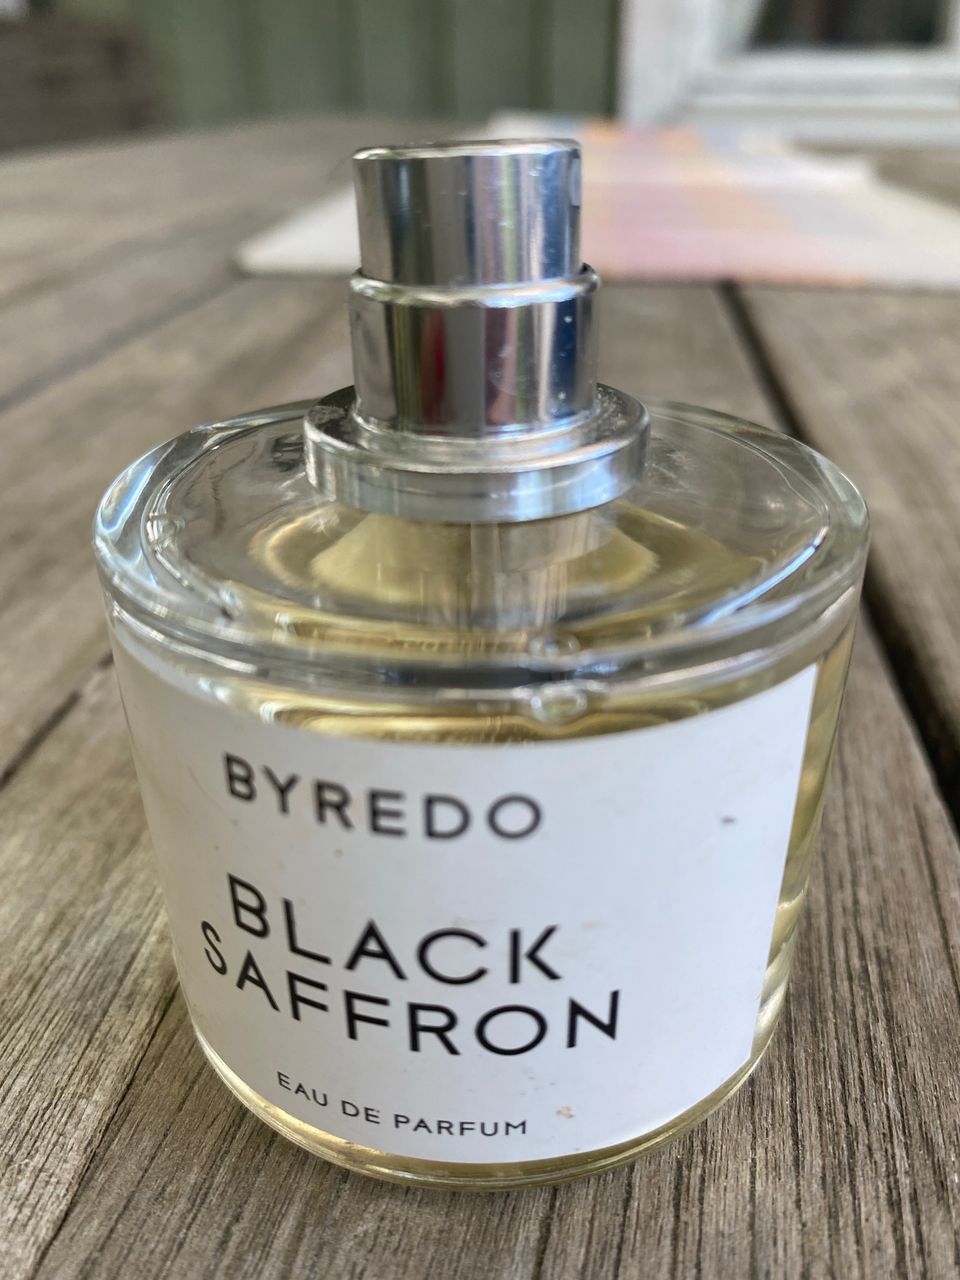 Byredo black saffron